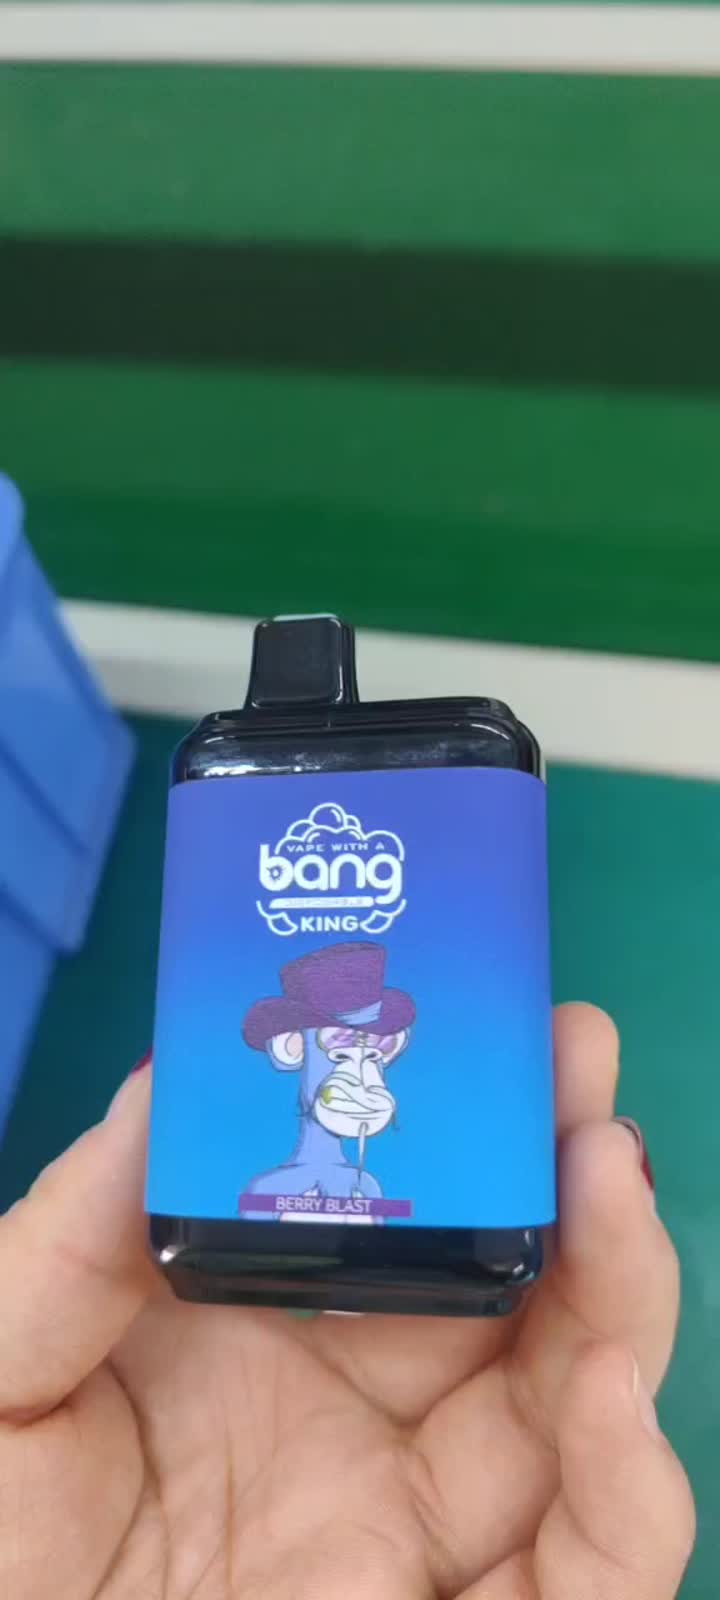 Bang King original 8000 bocanadas